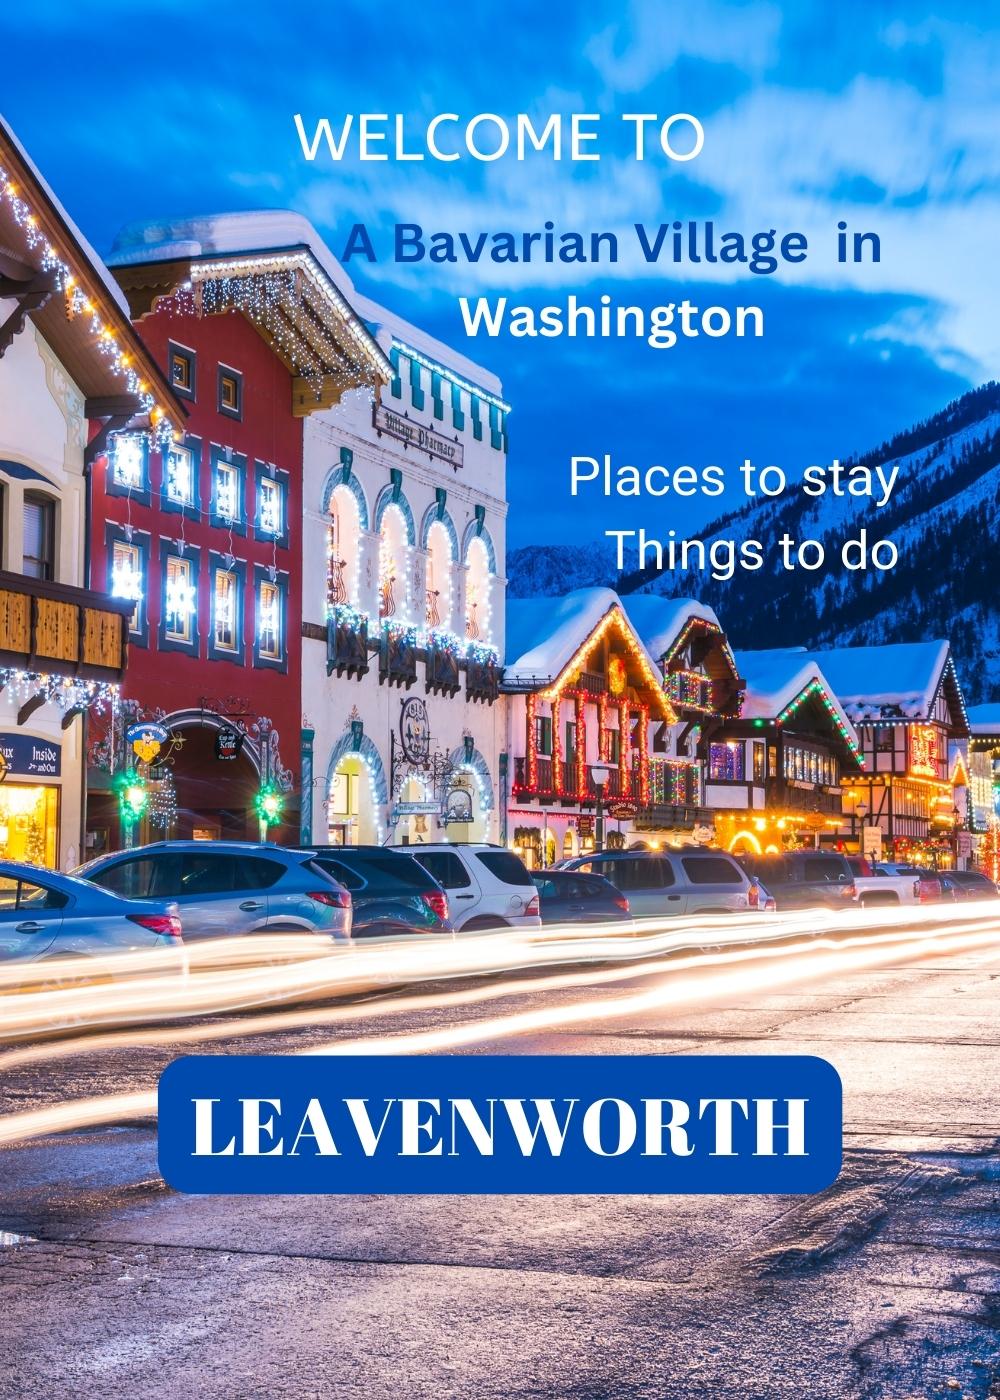 Visit Leavenworth Beautiful Bavarian village in Washington US Most beautiful place in America